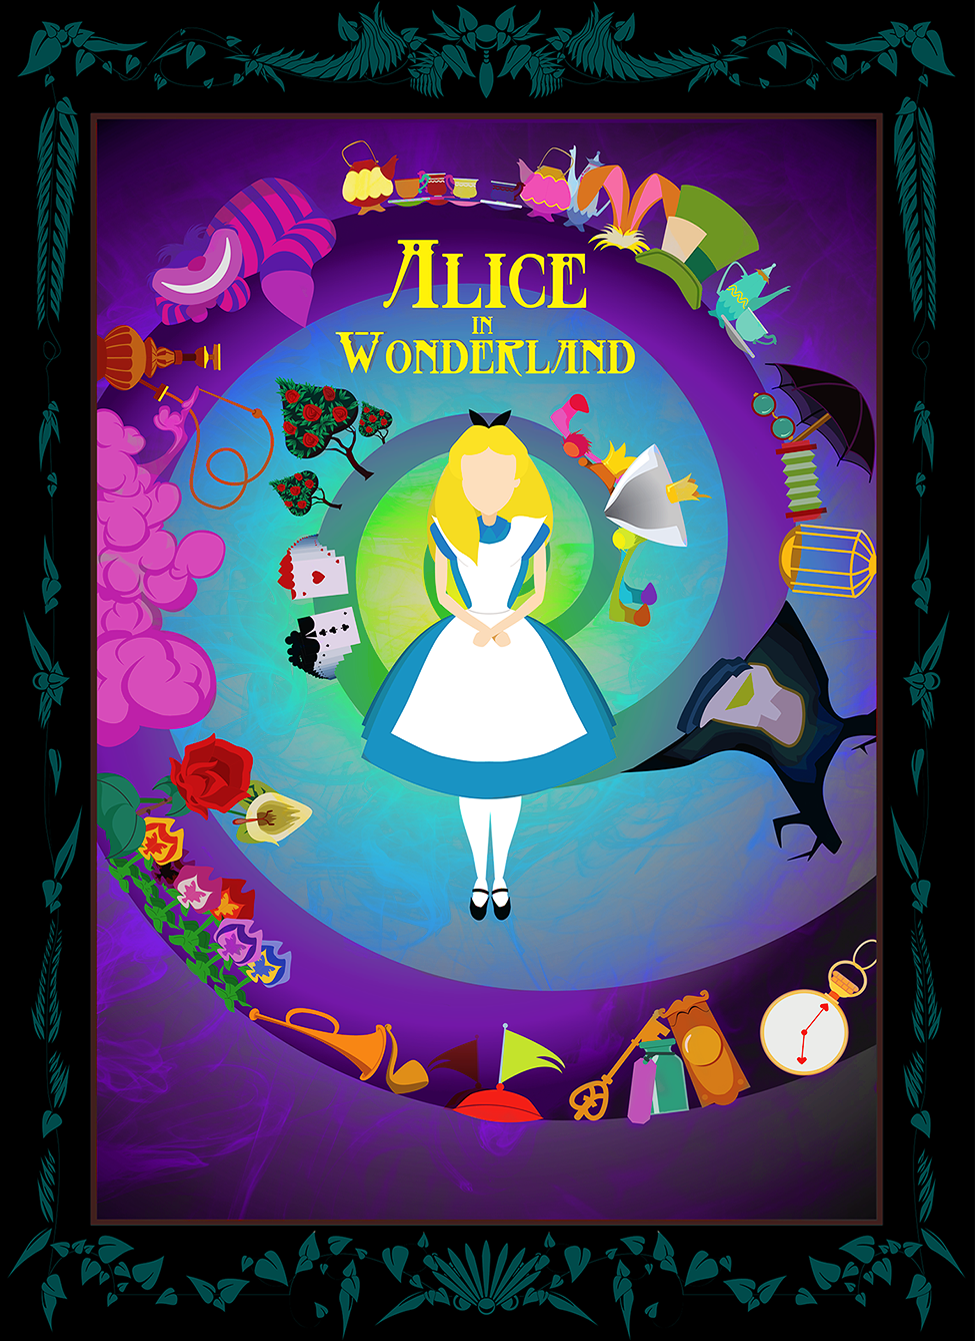 Disney's Alice in Wonderland | Graphic Illustration on Behance